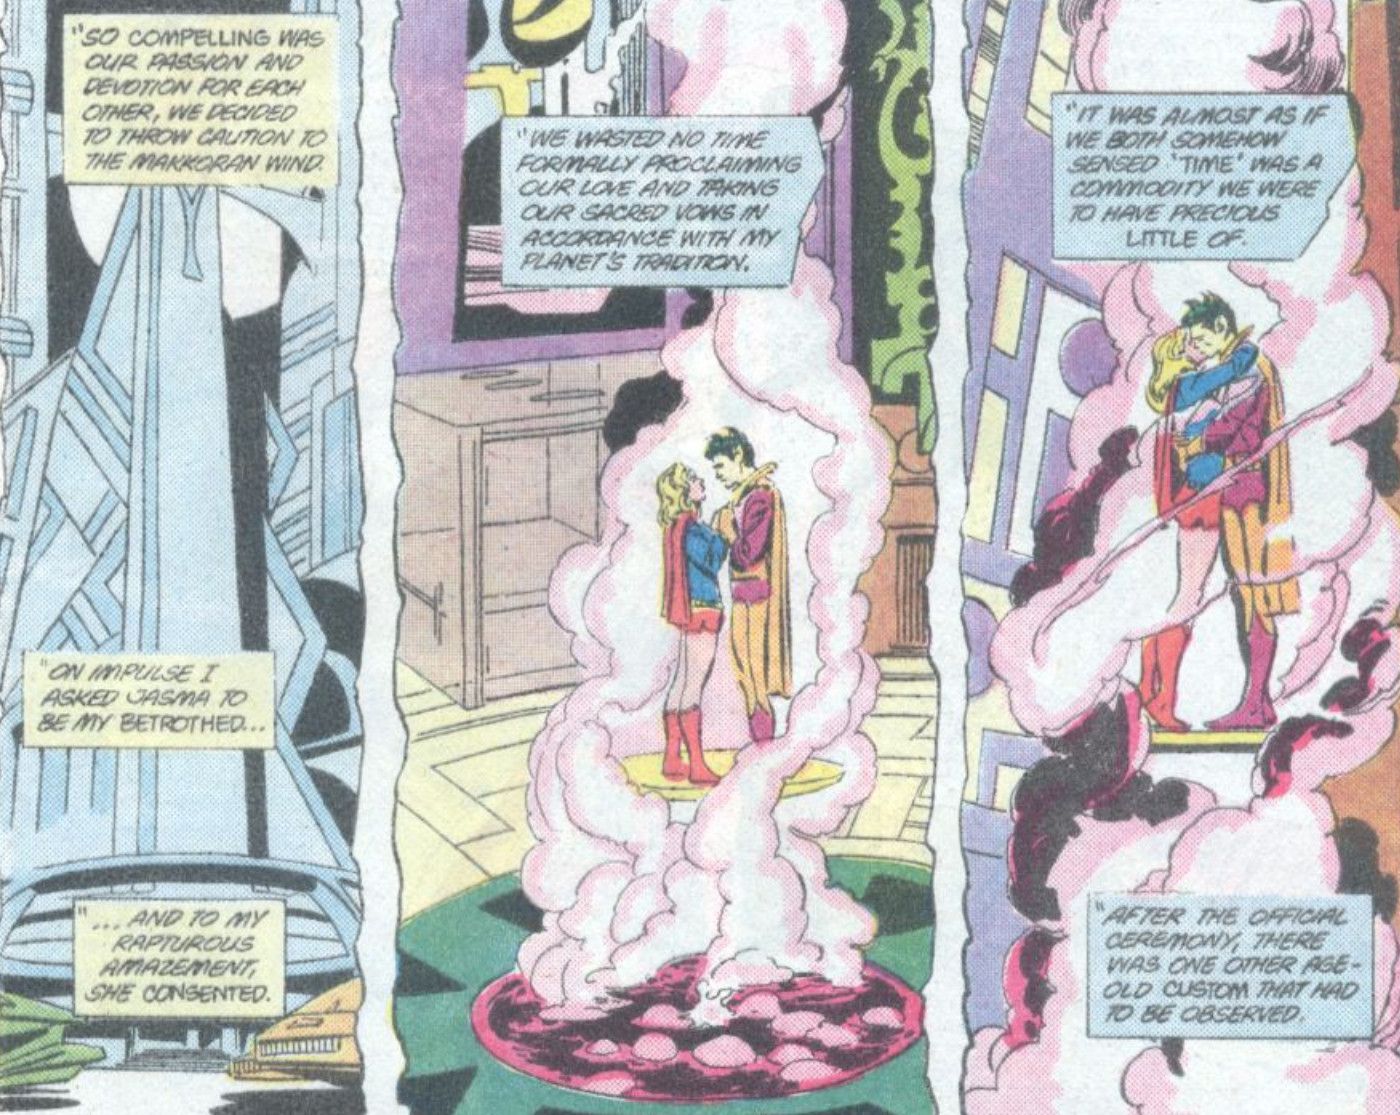 Supergirl’s Secret Marriage Made Her Death Even More Tragic